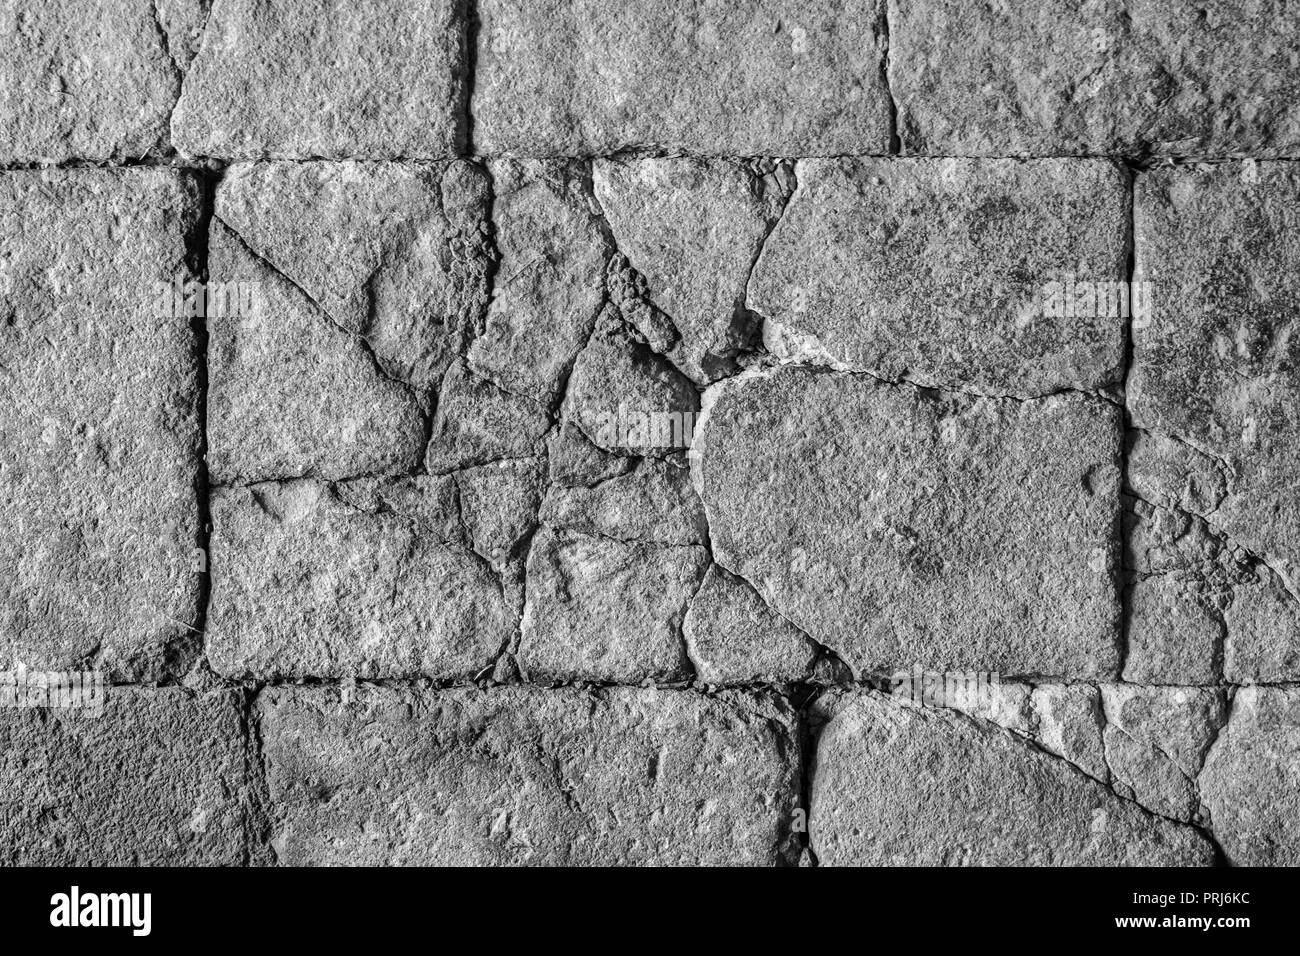 cracked stone texture, antique stone floor / wall with cracks Stock Photo